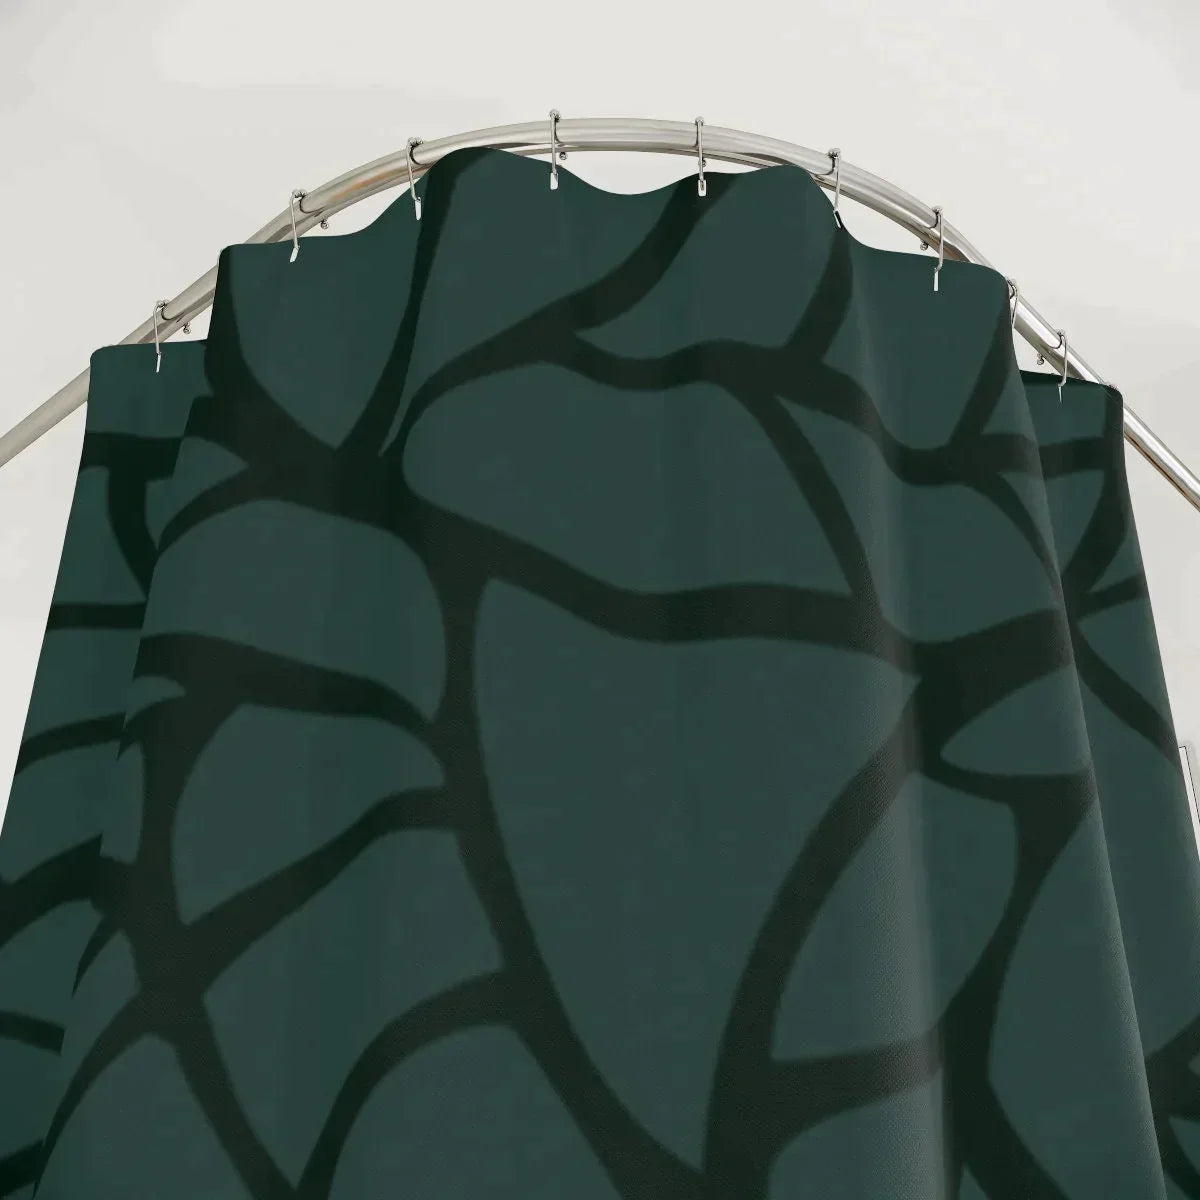 Boho Shower Curtain Bobo Green Shower Curtain, Cool Cute Bathroom Accessories, Groovy Retro Shower Curtain, Extra Long Shower Curtain